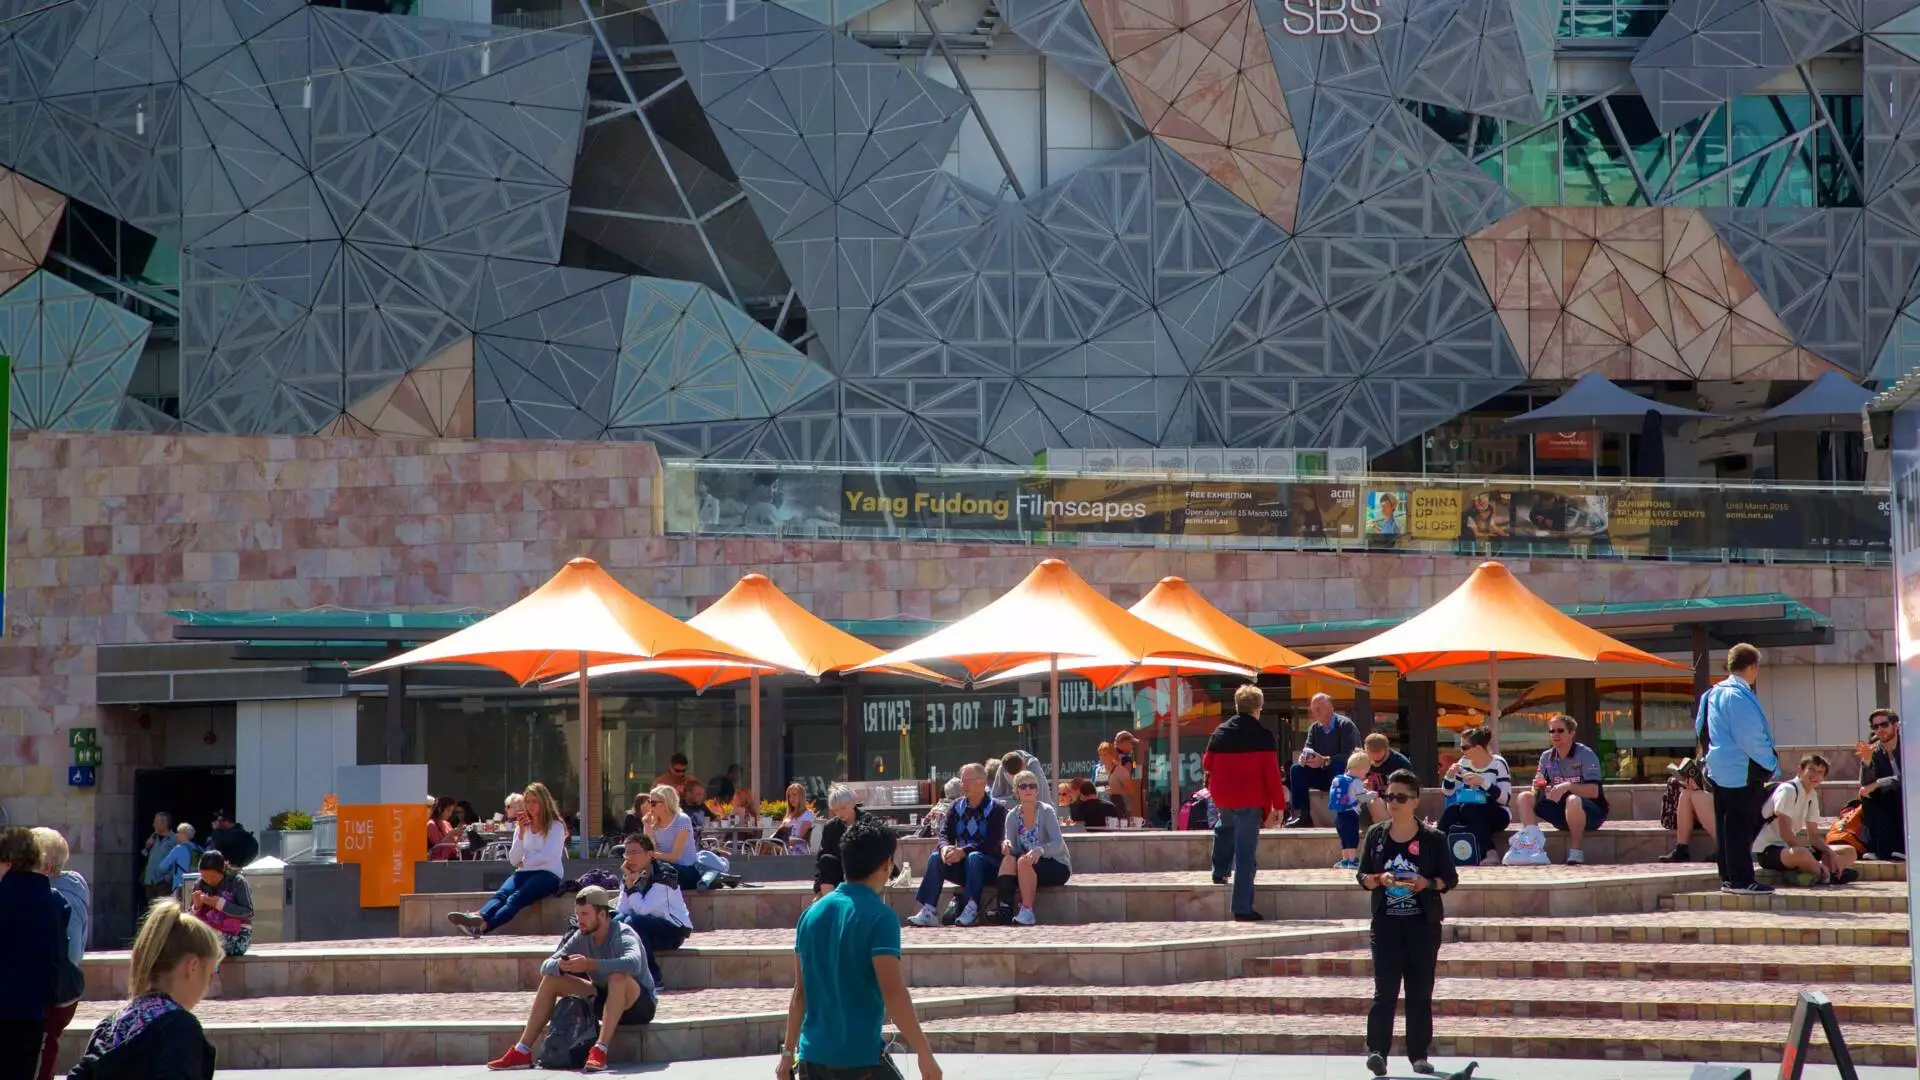 Federation Square On Melbourne In Australia